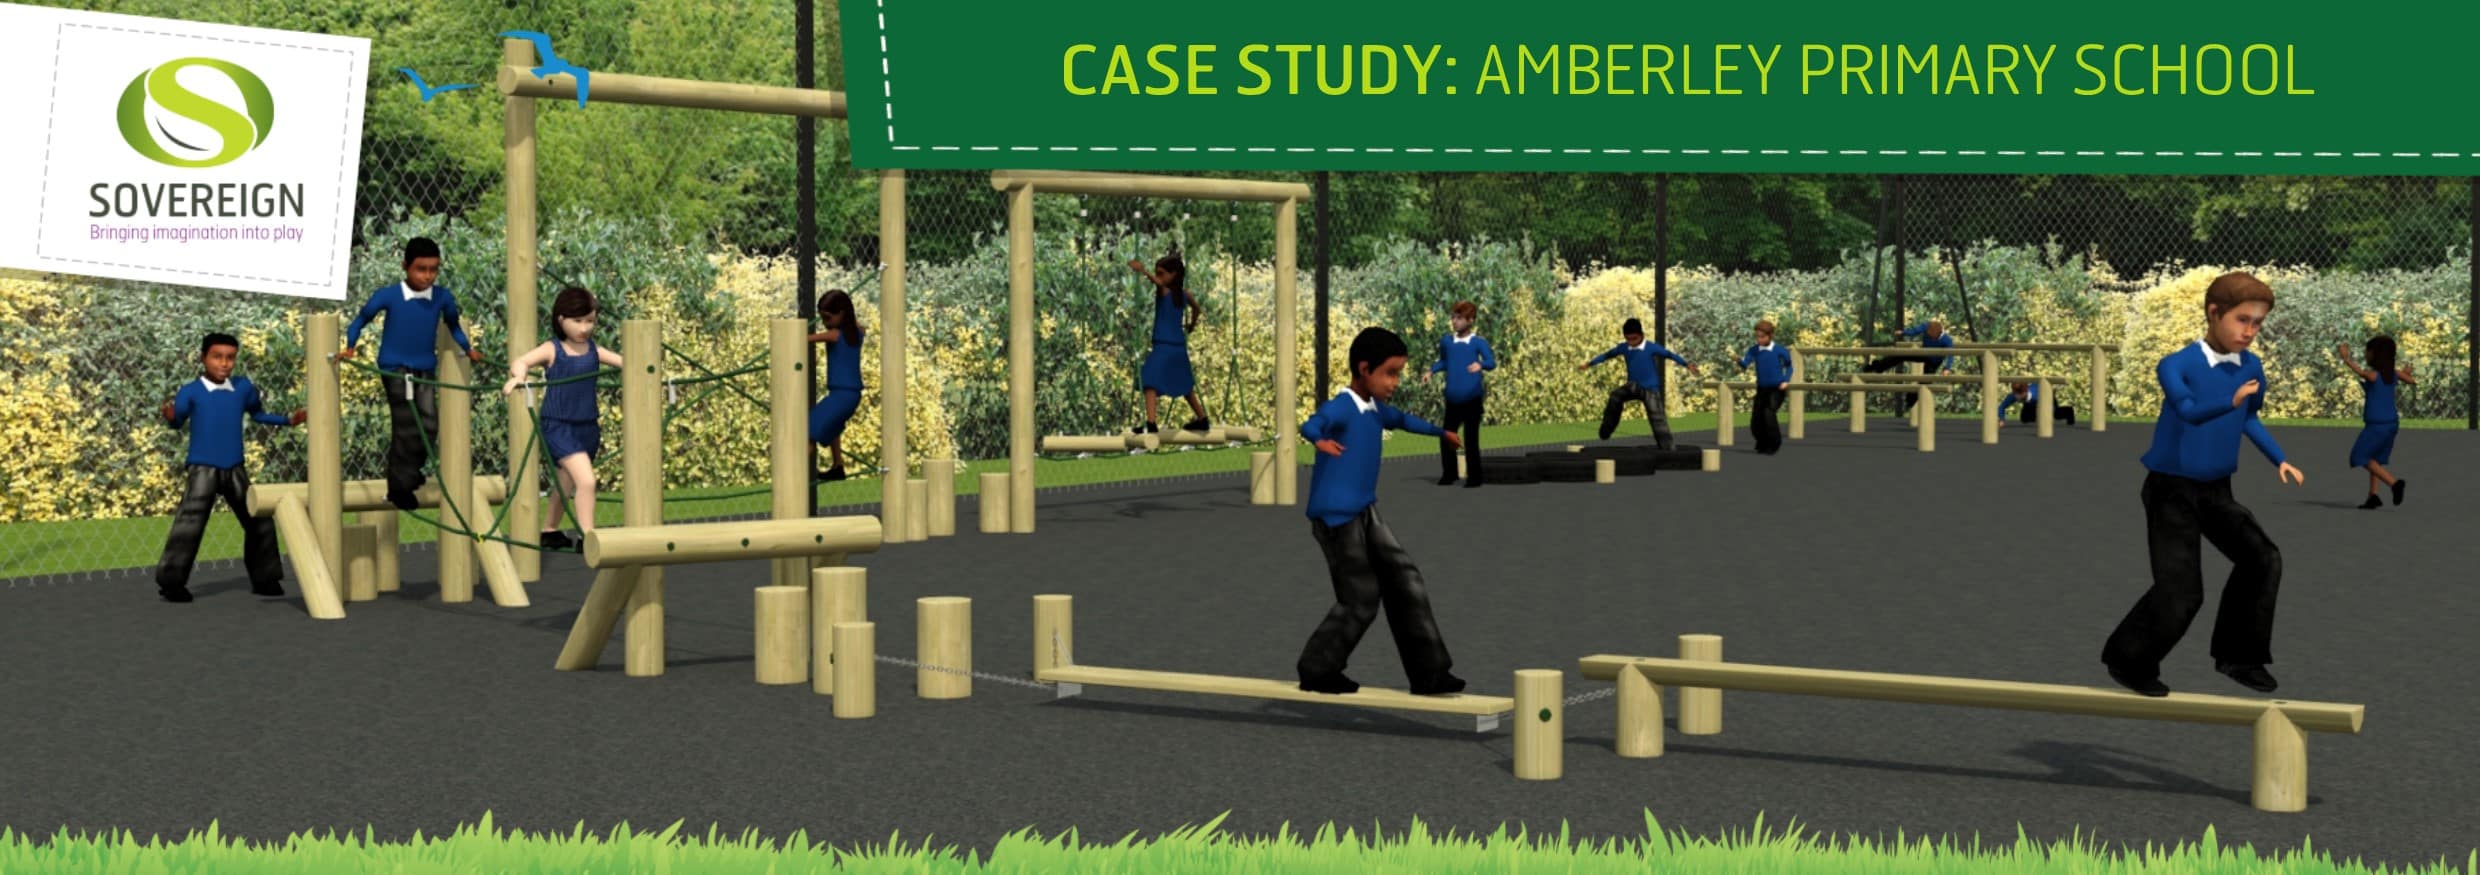 Case Study: Amberley Primary School